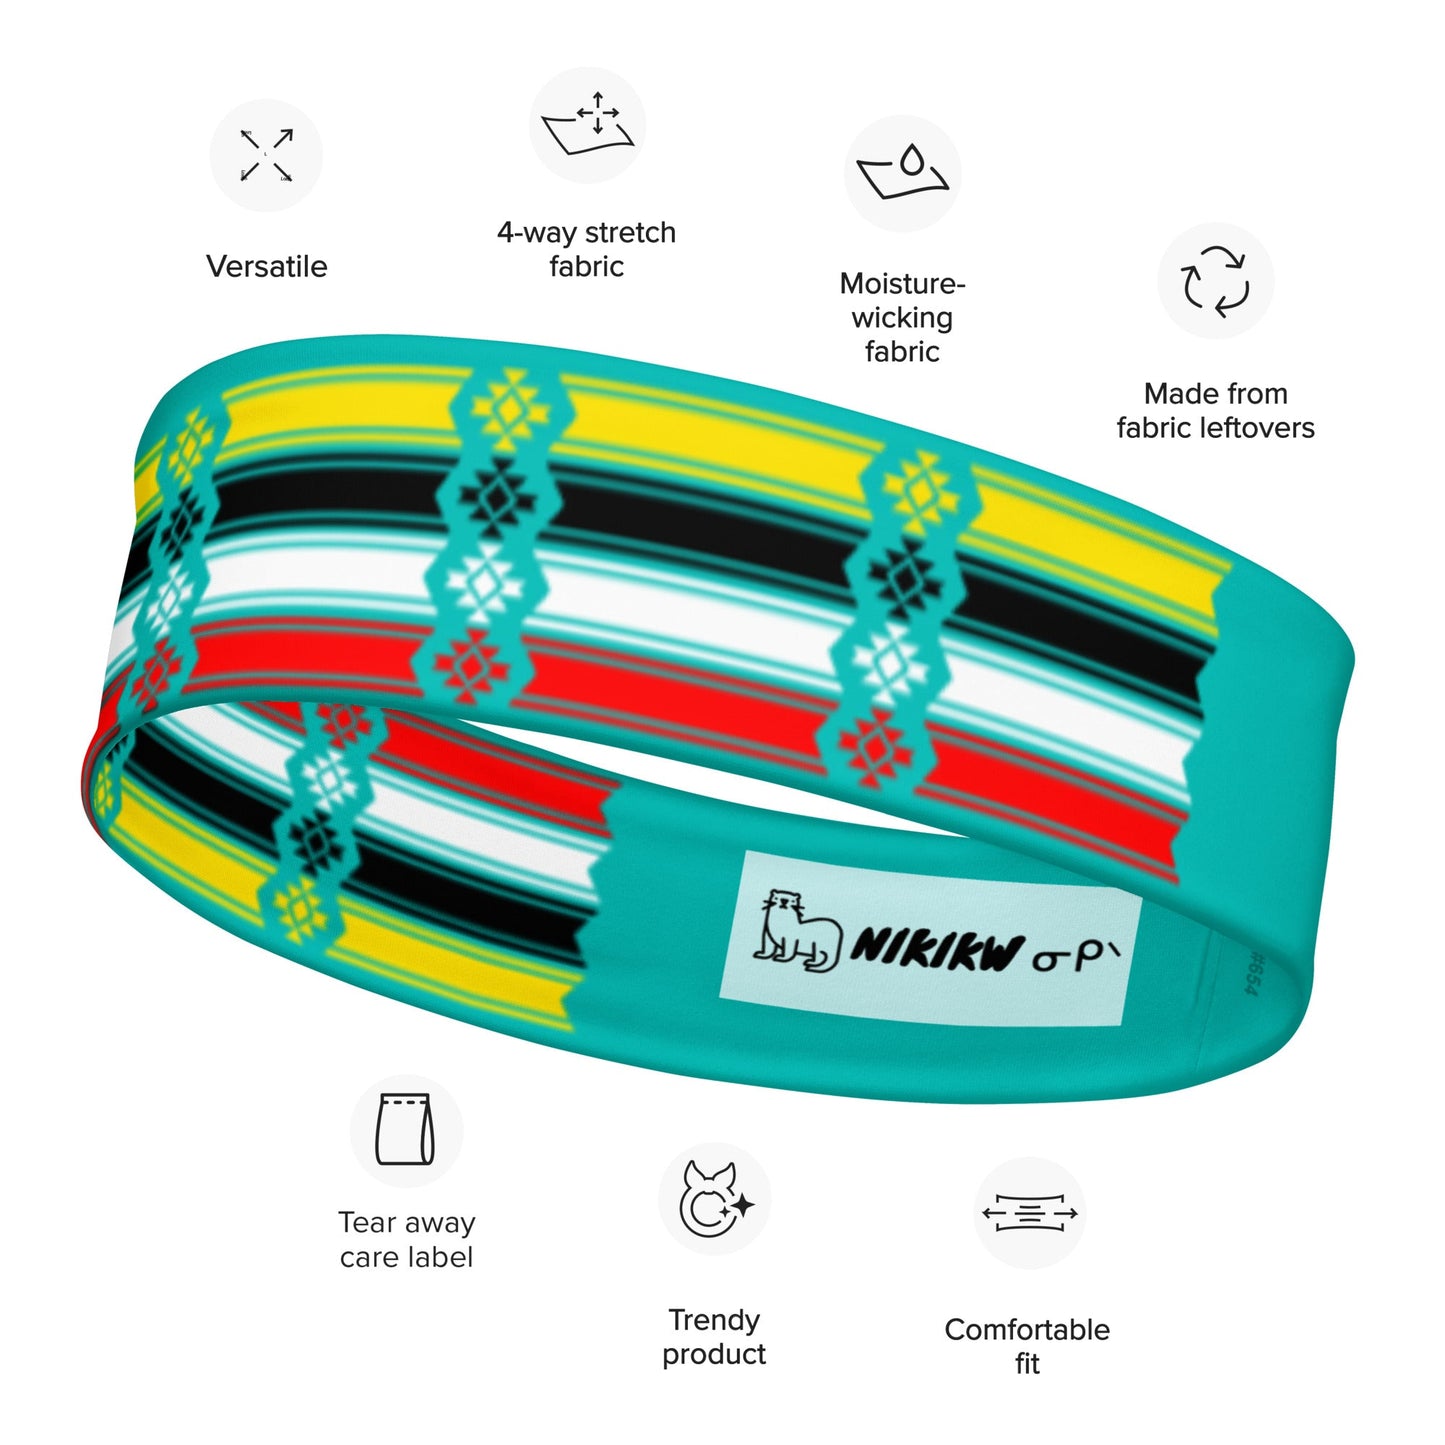 Native Headband - Nikikw Designs